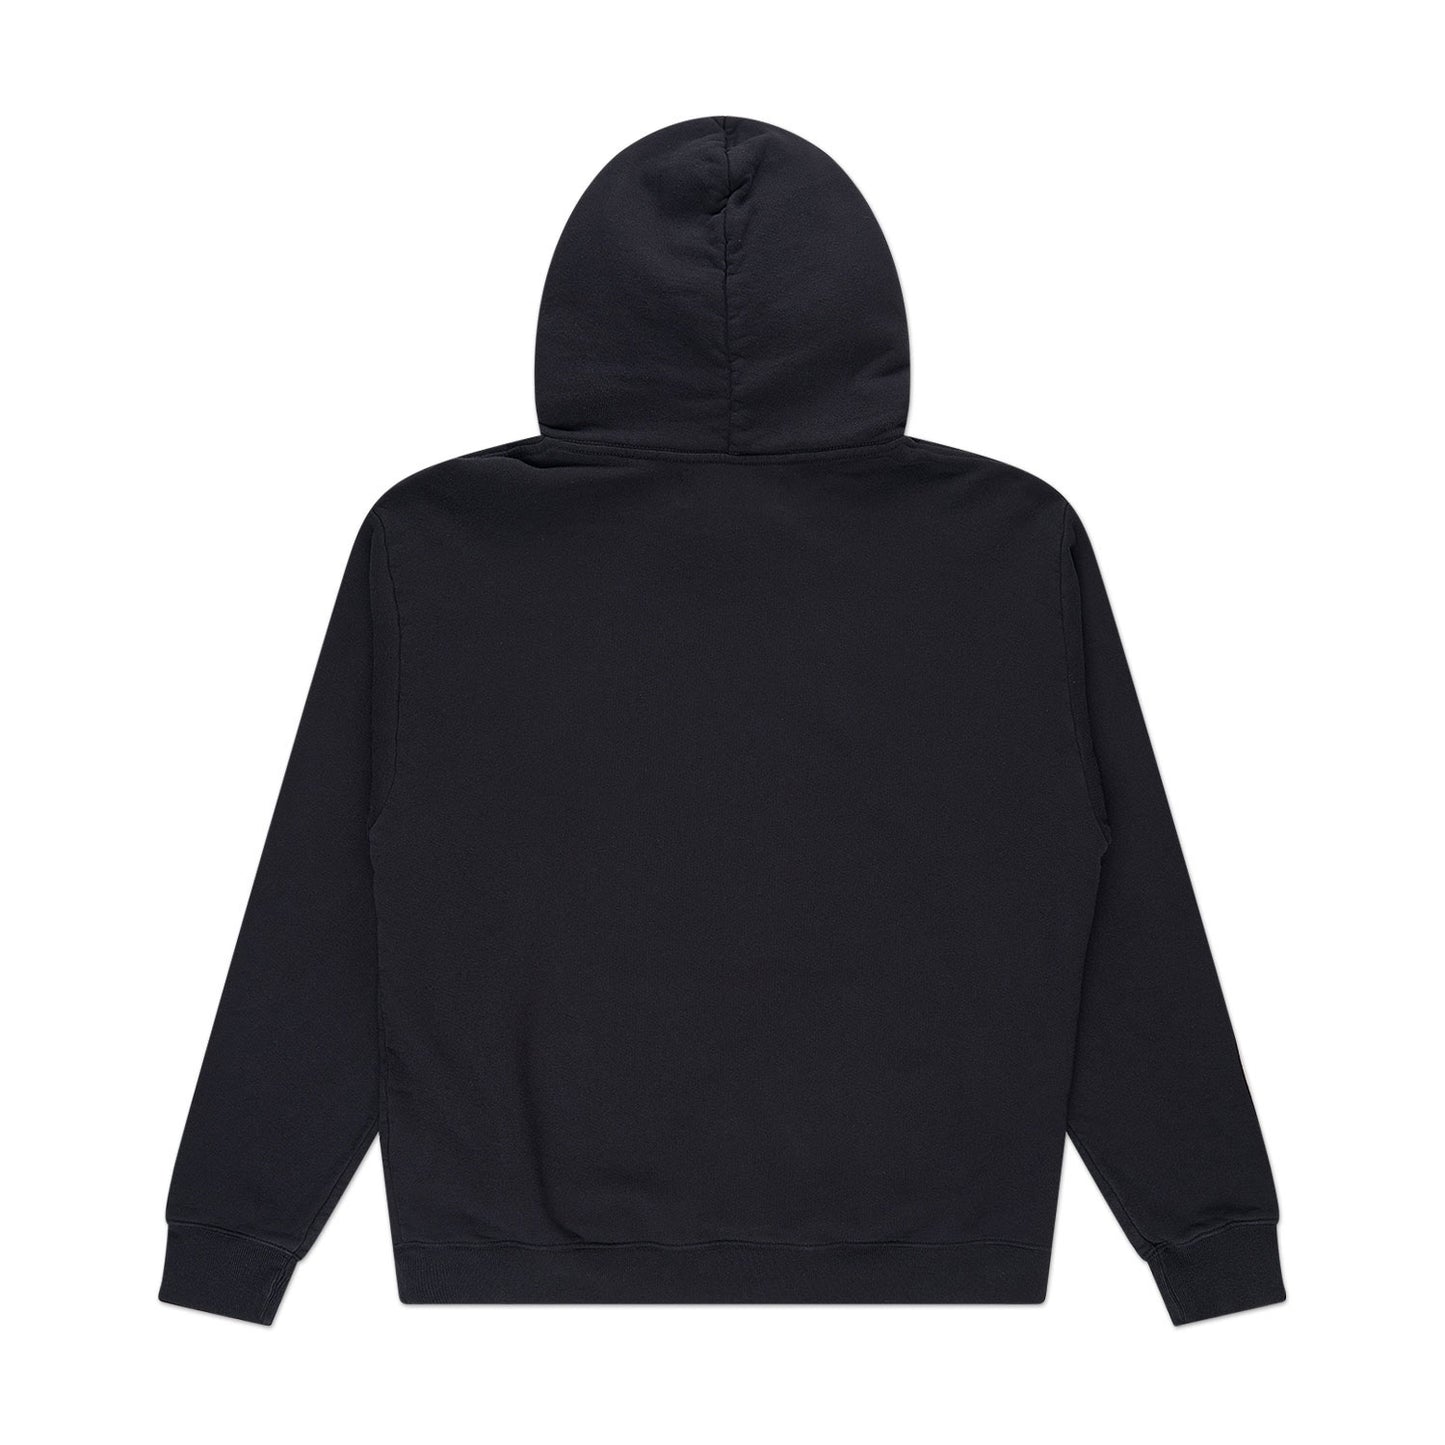 bianca chandôn logo hoodie (black)